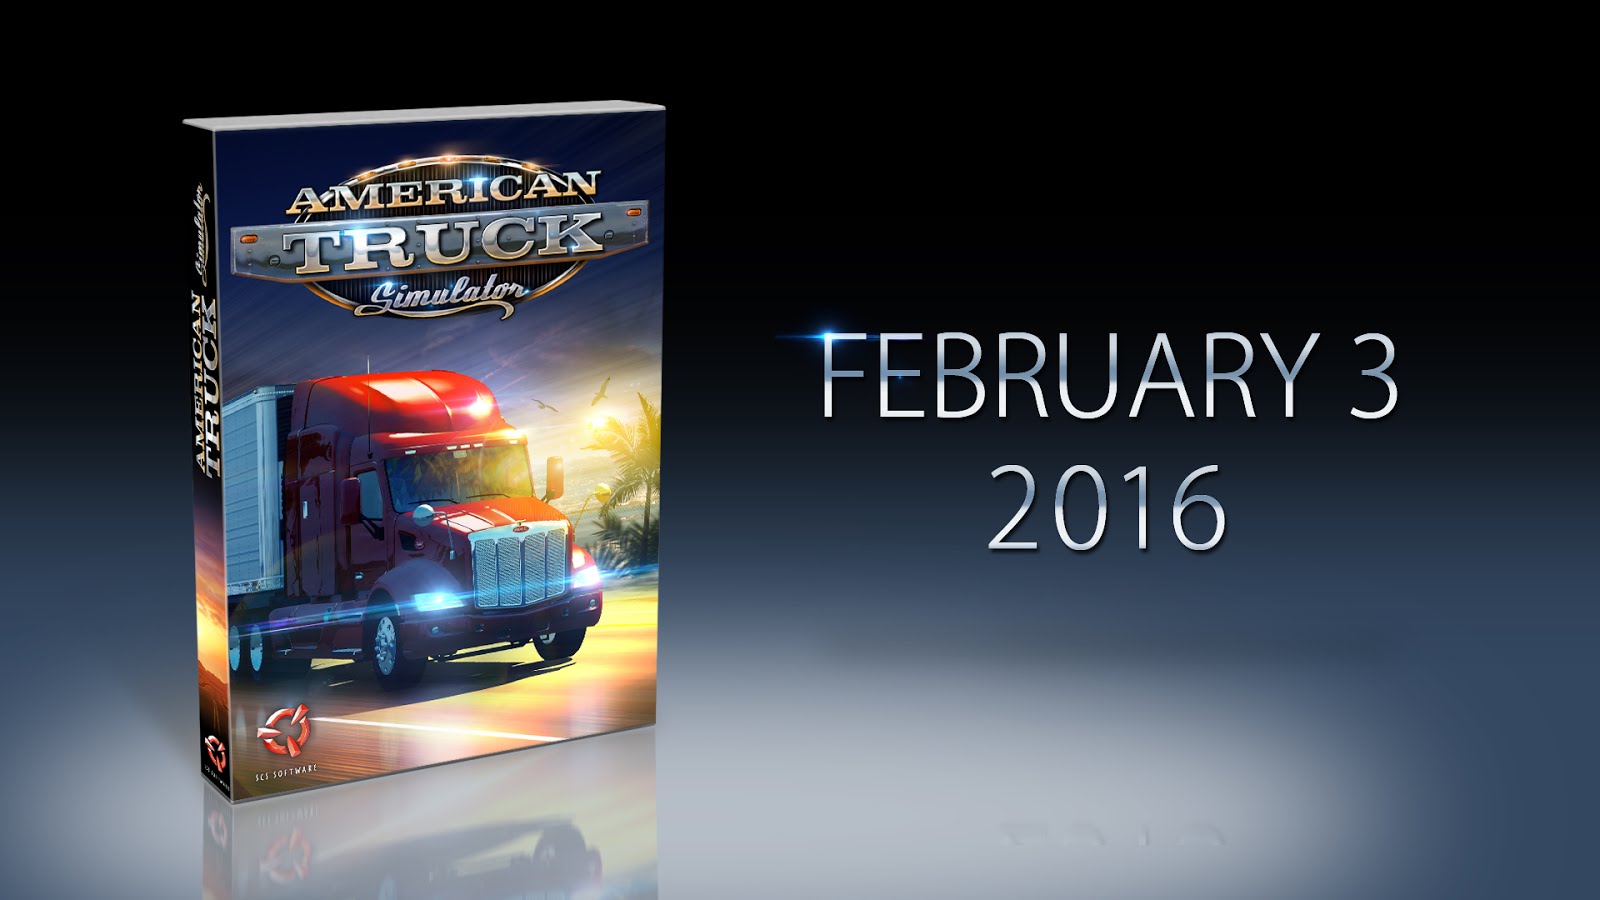 American Truck Simulator release date is February 3, 2016